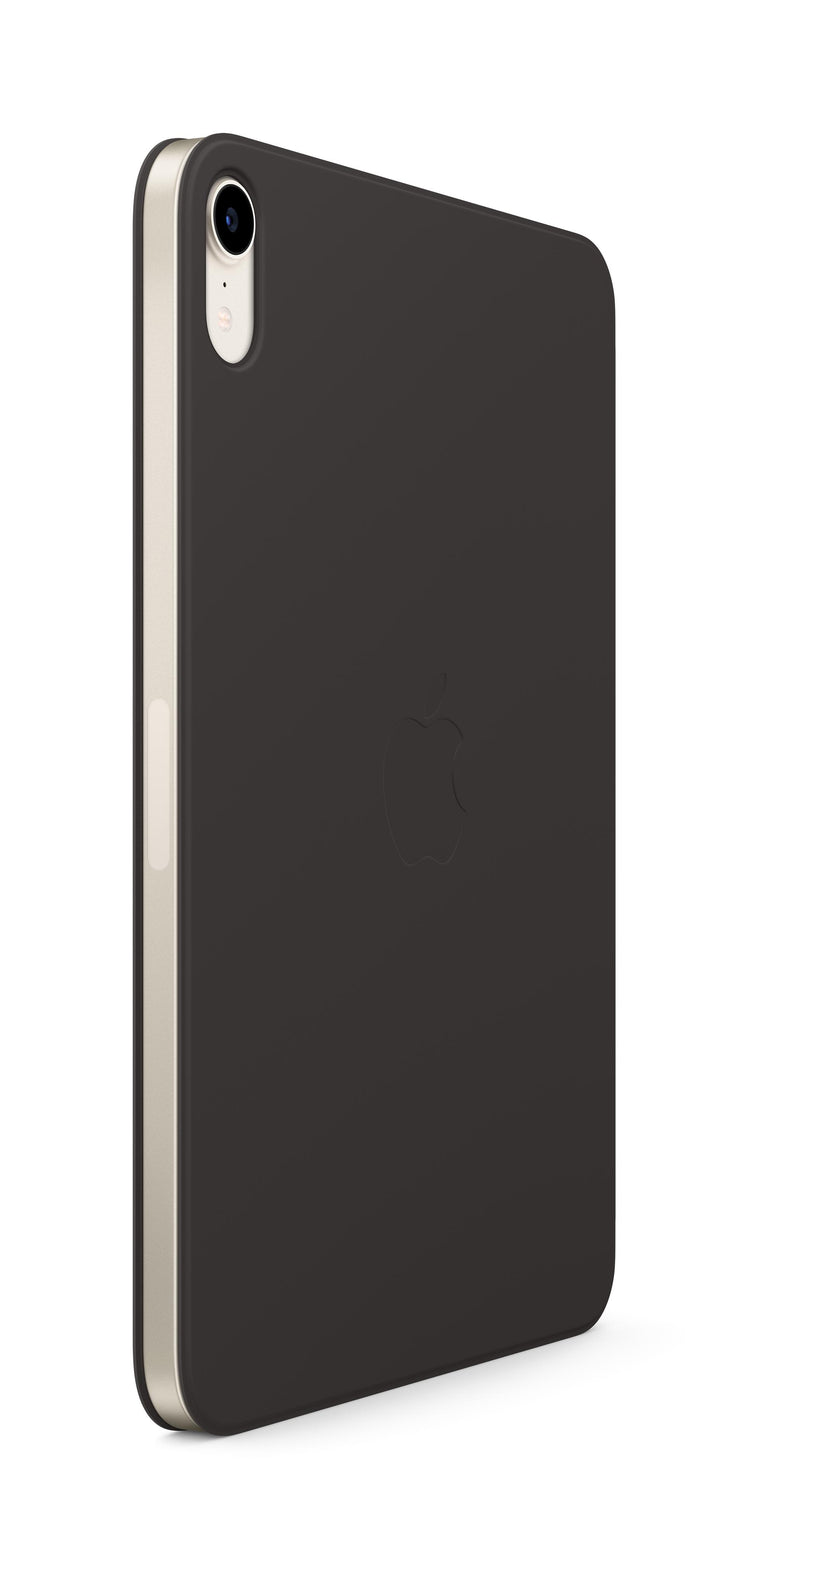 Smart Folio for iPad mini (6th generation) - Black Get best offers for Smart Folio for iPad mini (6th generation) - Black